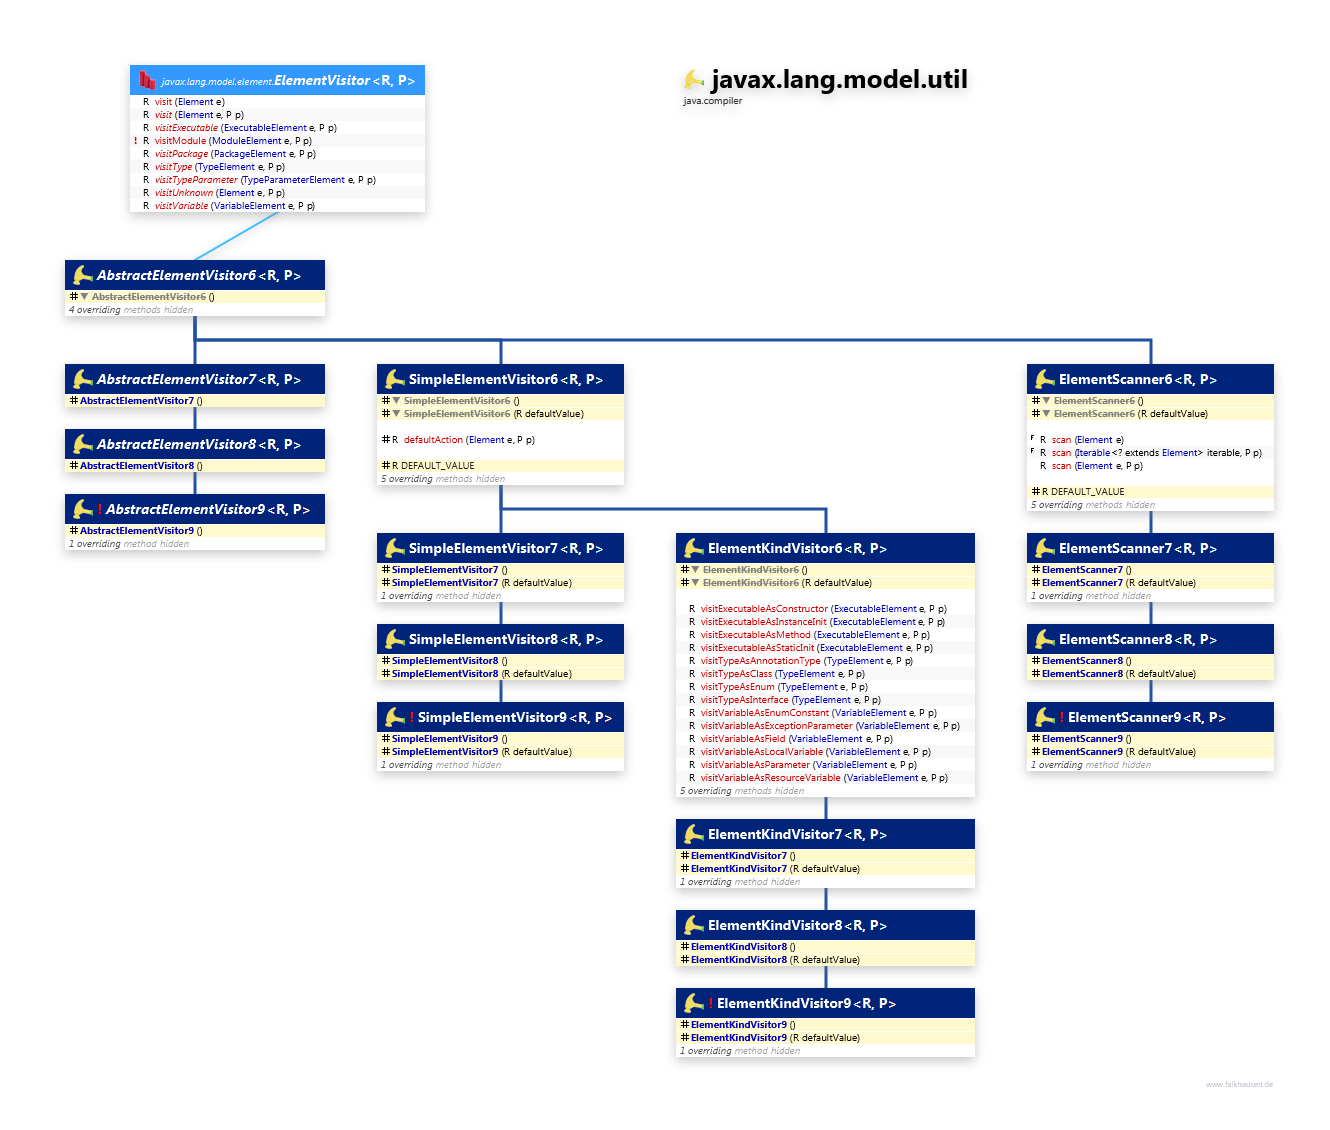 javax.lang.model.util ElementVisitor class diagram and api documentation for Java 10